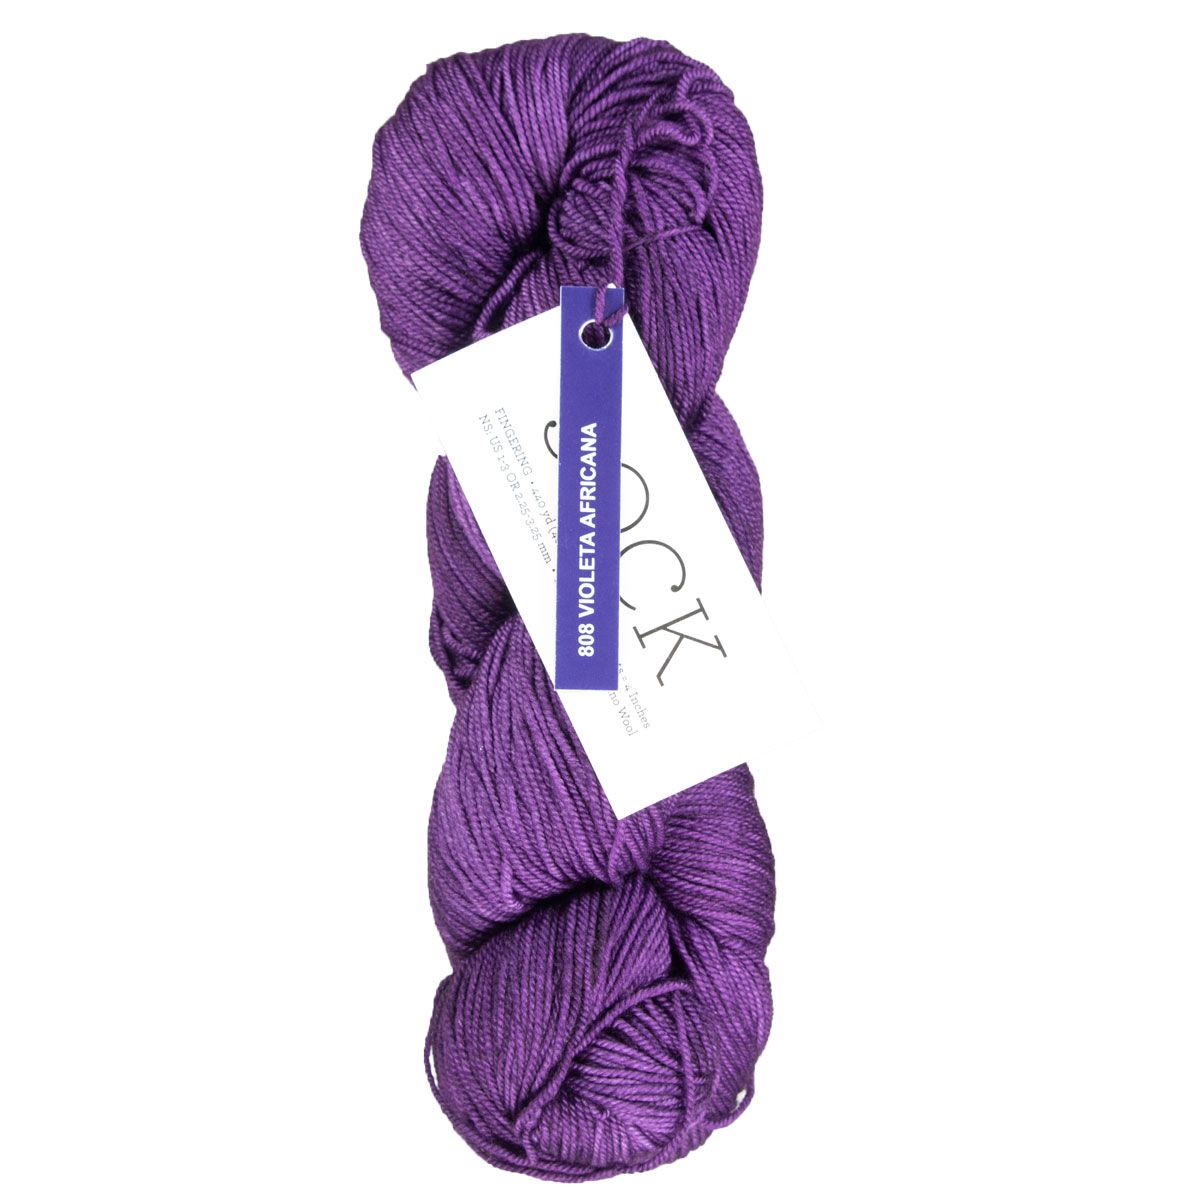 Malabrigo Sock Yarn - 808 Violeta Africana Reviews at Jimmy Beans Wool